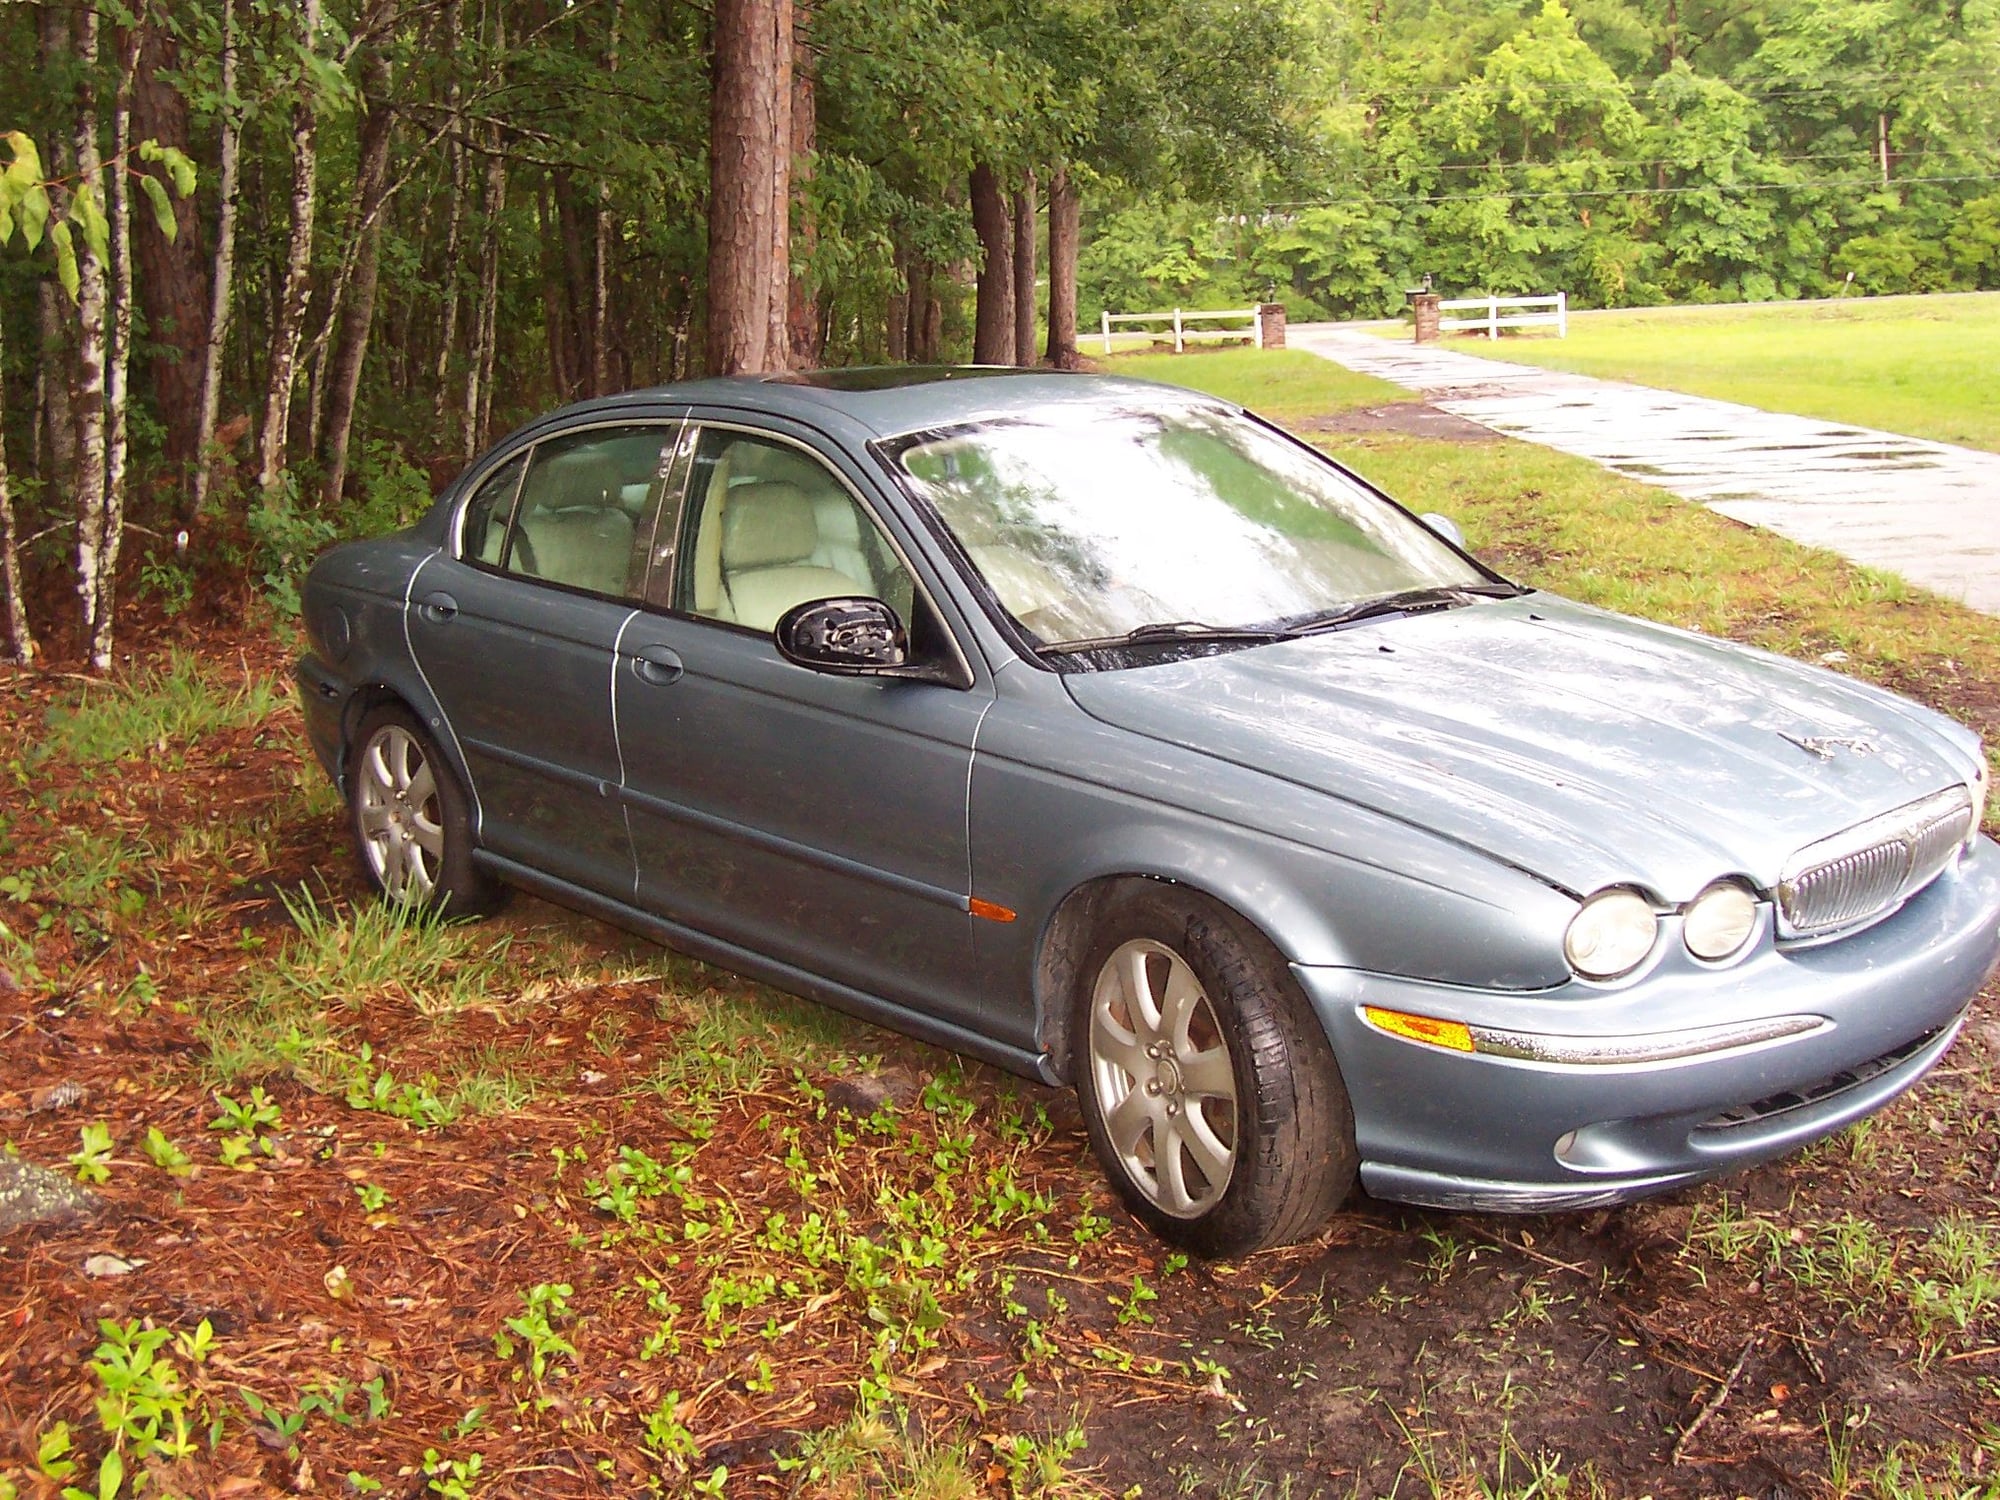 Miscellaneous - Part out 2004 (2002-2008) Jaguar x-type - Used - 2002 to 2008 Jaguar X-Type - Callahan, FL 32011, United States